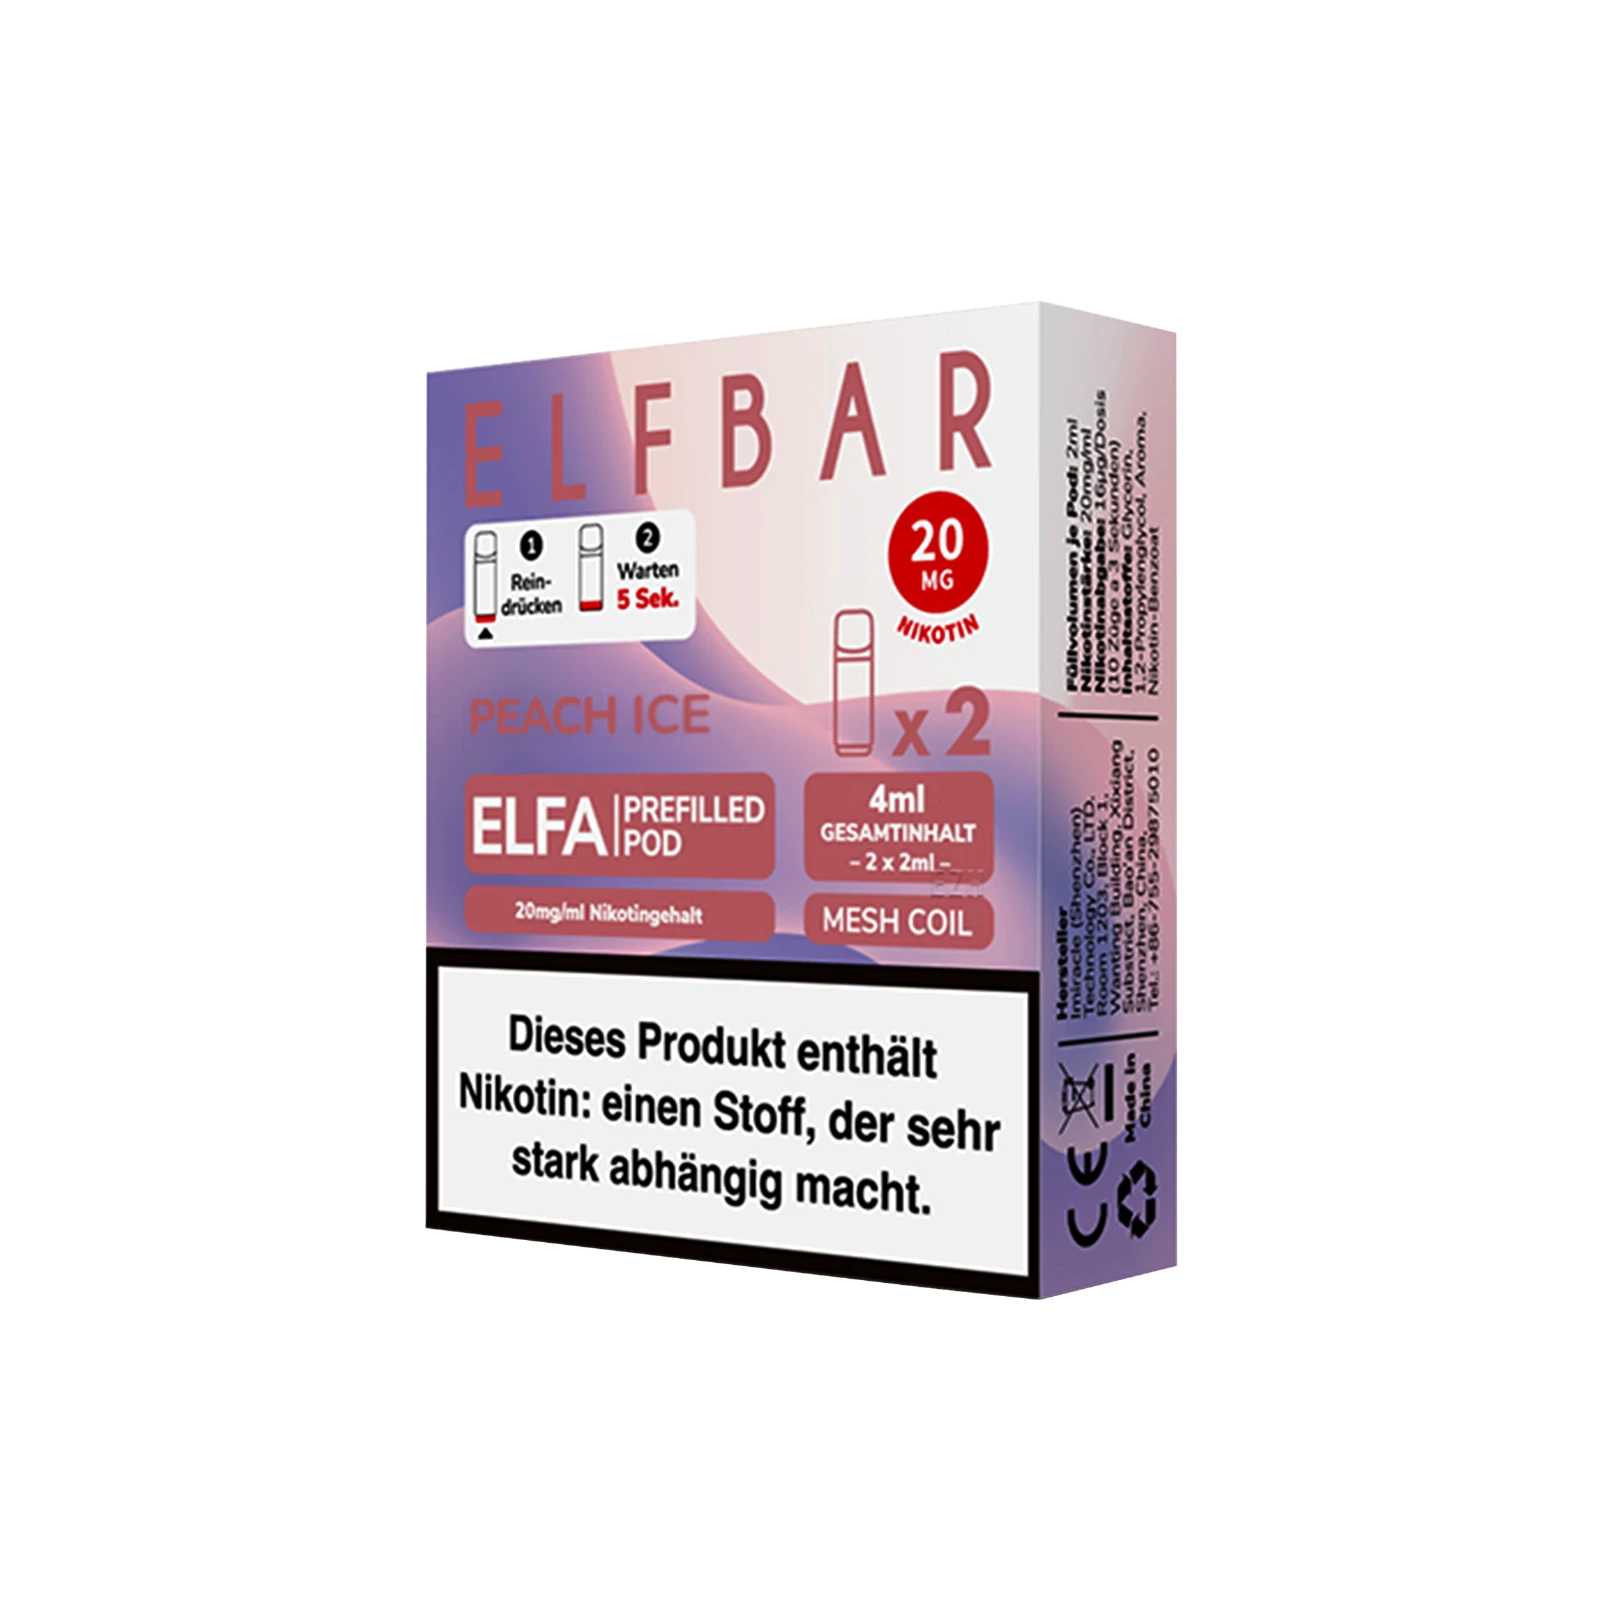 Elf Bar ELFA CP Prefilled Pod Peach Ice | Neue Liquid Sorten 1